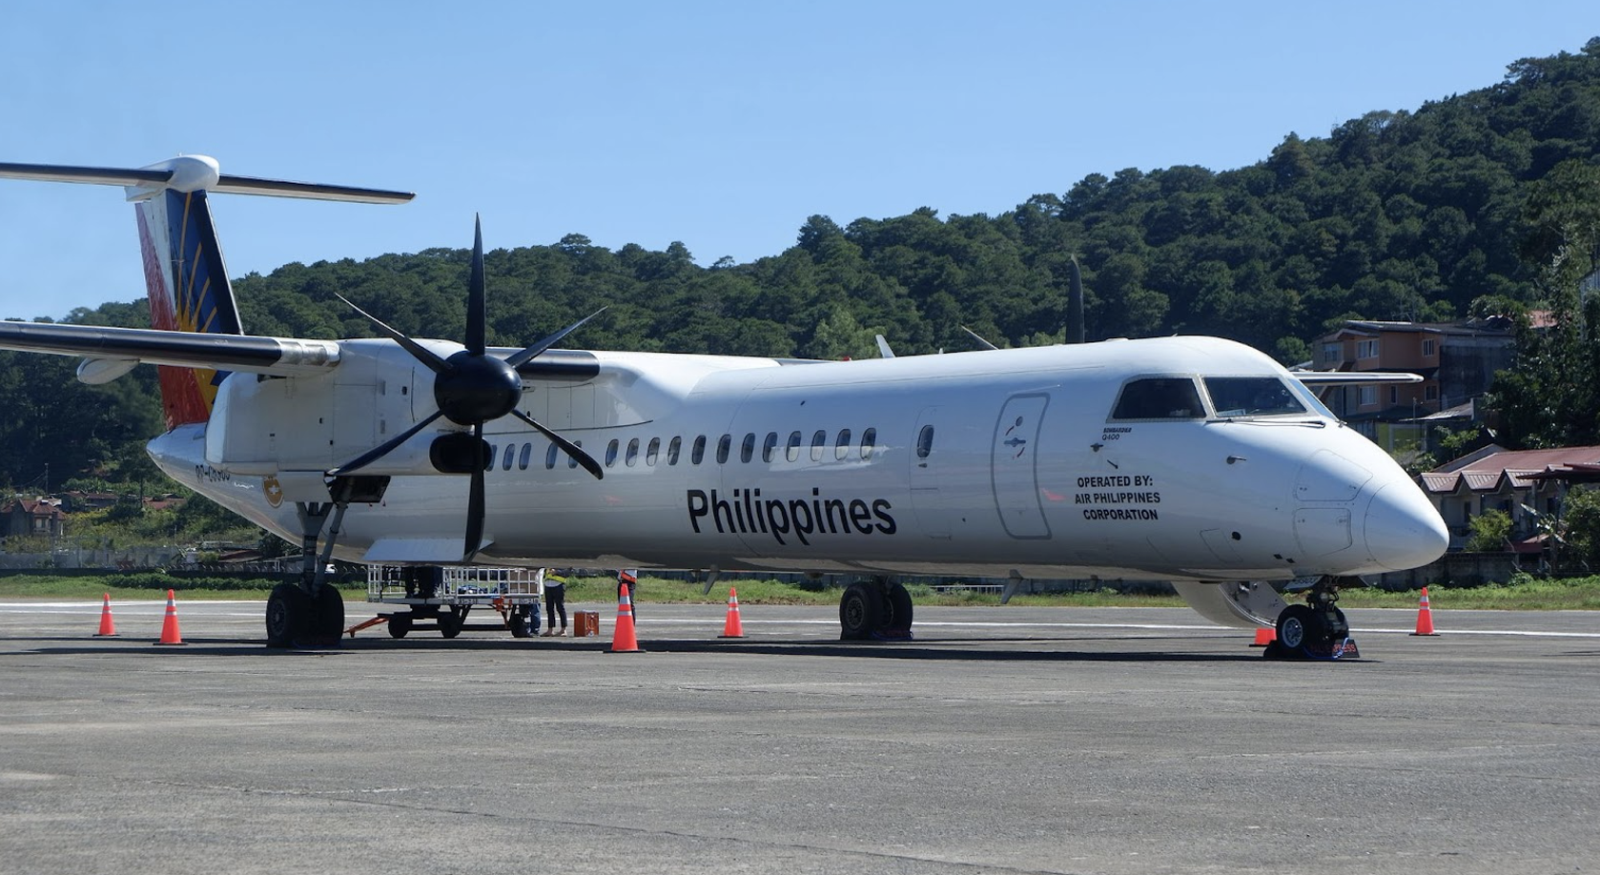 Philippines Airlines mở đường bay Baguio - Cebu từ 16/12/2022